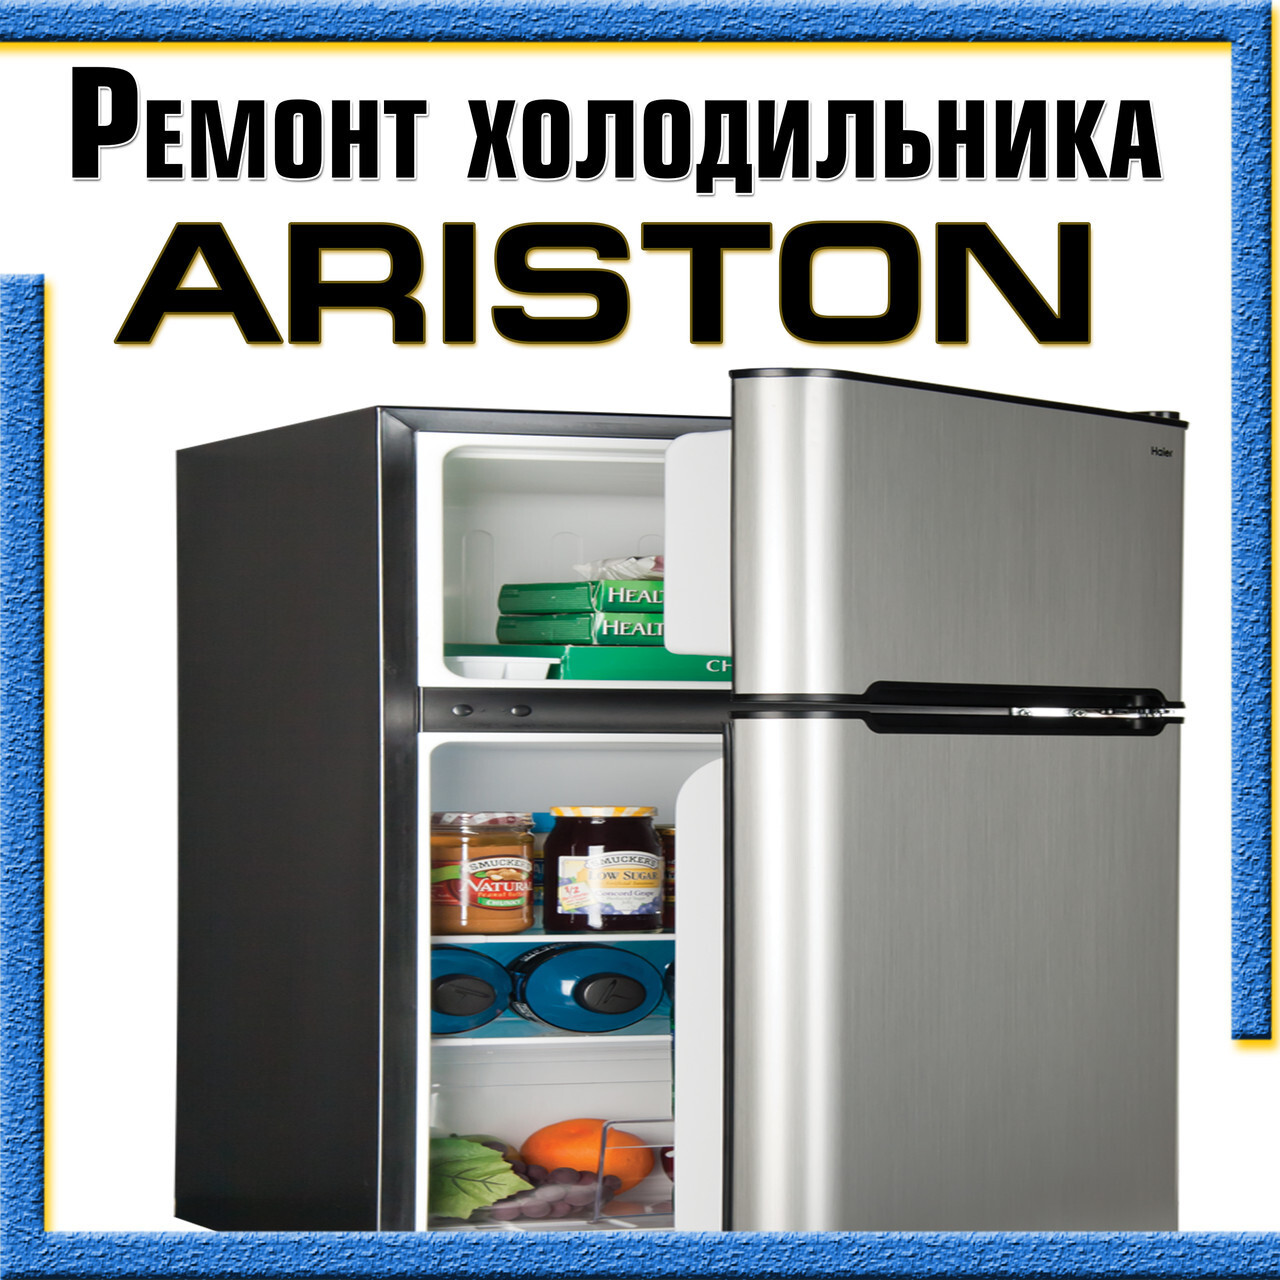 Ariston сервисные центры ariston help. Холодильник Аристон. Ремонт холодильников Аристон. Холодильник Аристон модели. Холодильник Аристон Air.